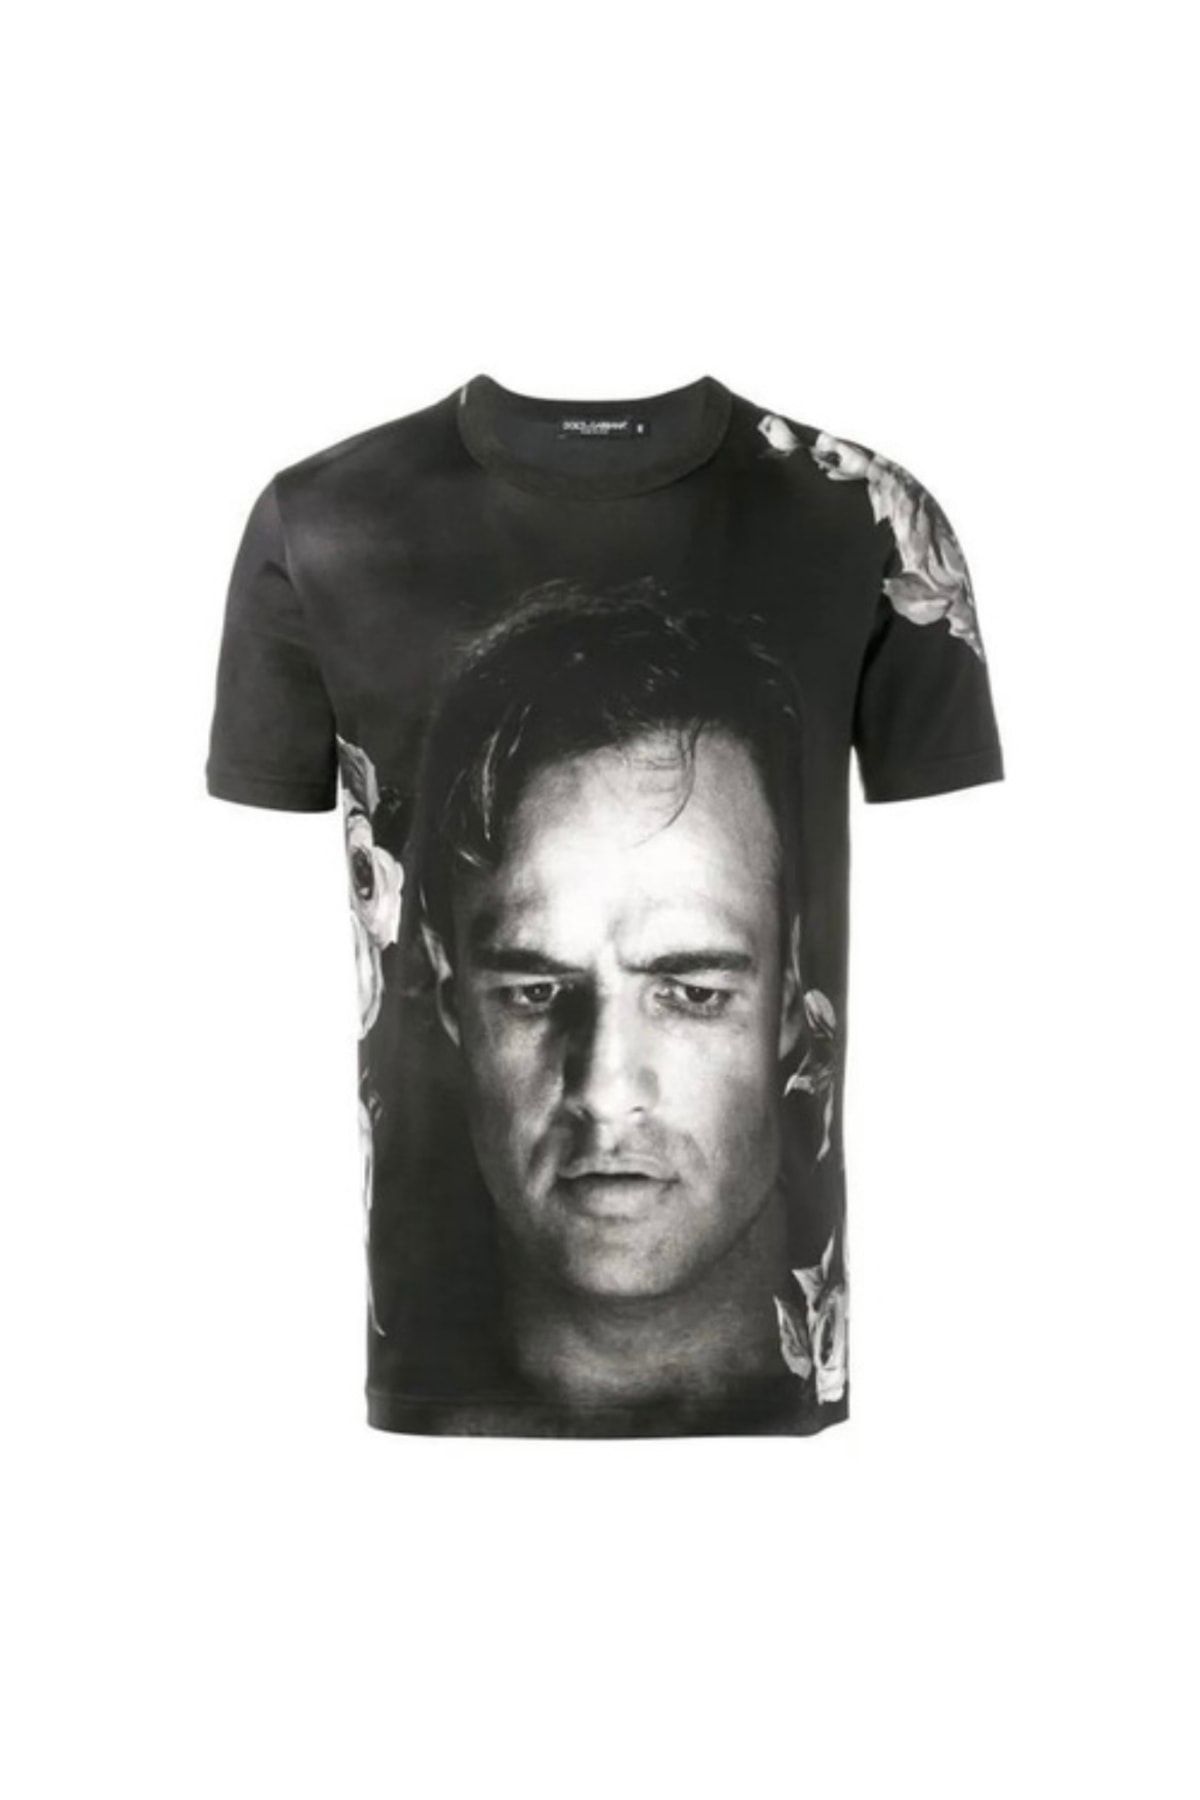 Dolce&Gabbana Homme Marlon Brando T-shirt G8gx8tfp719